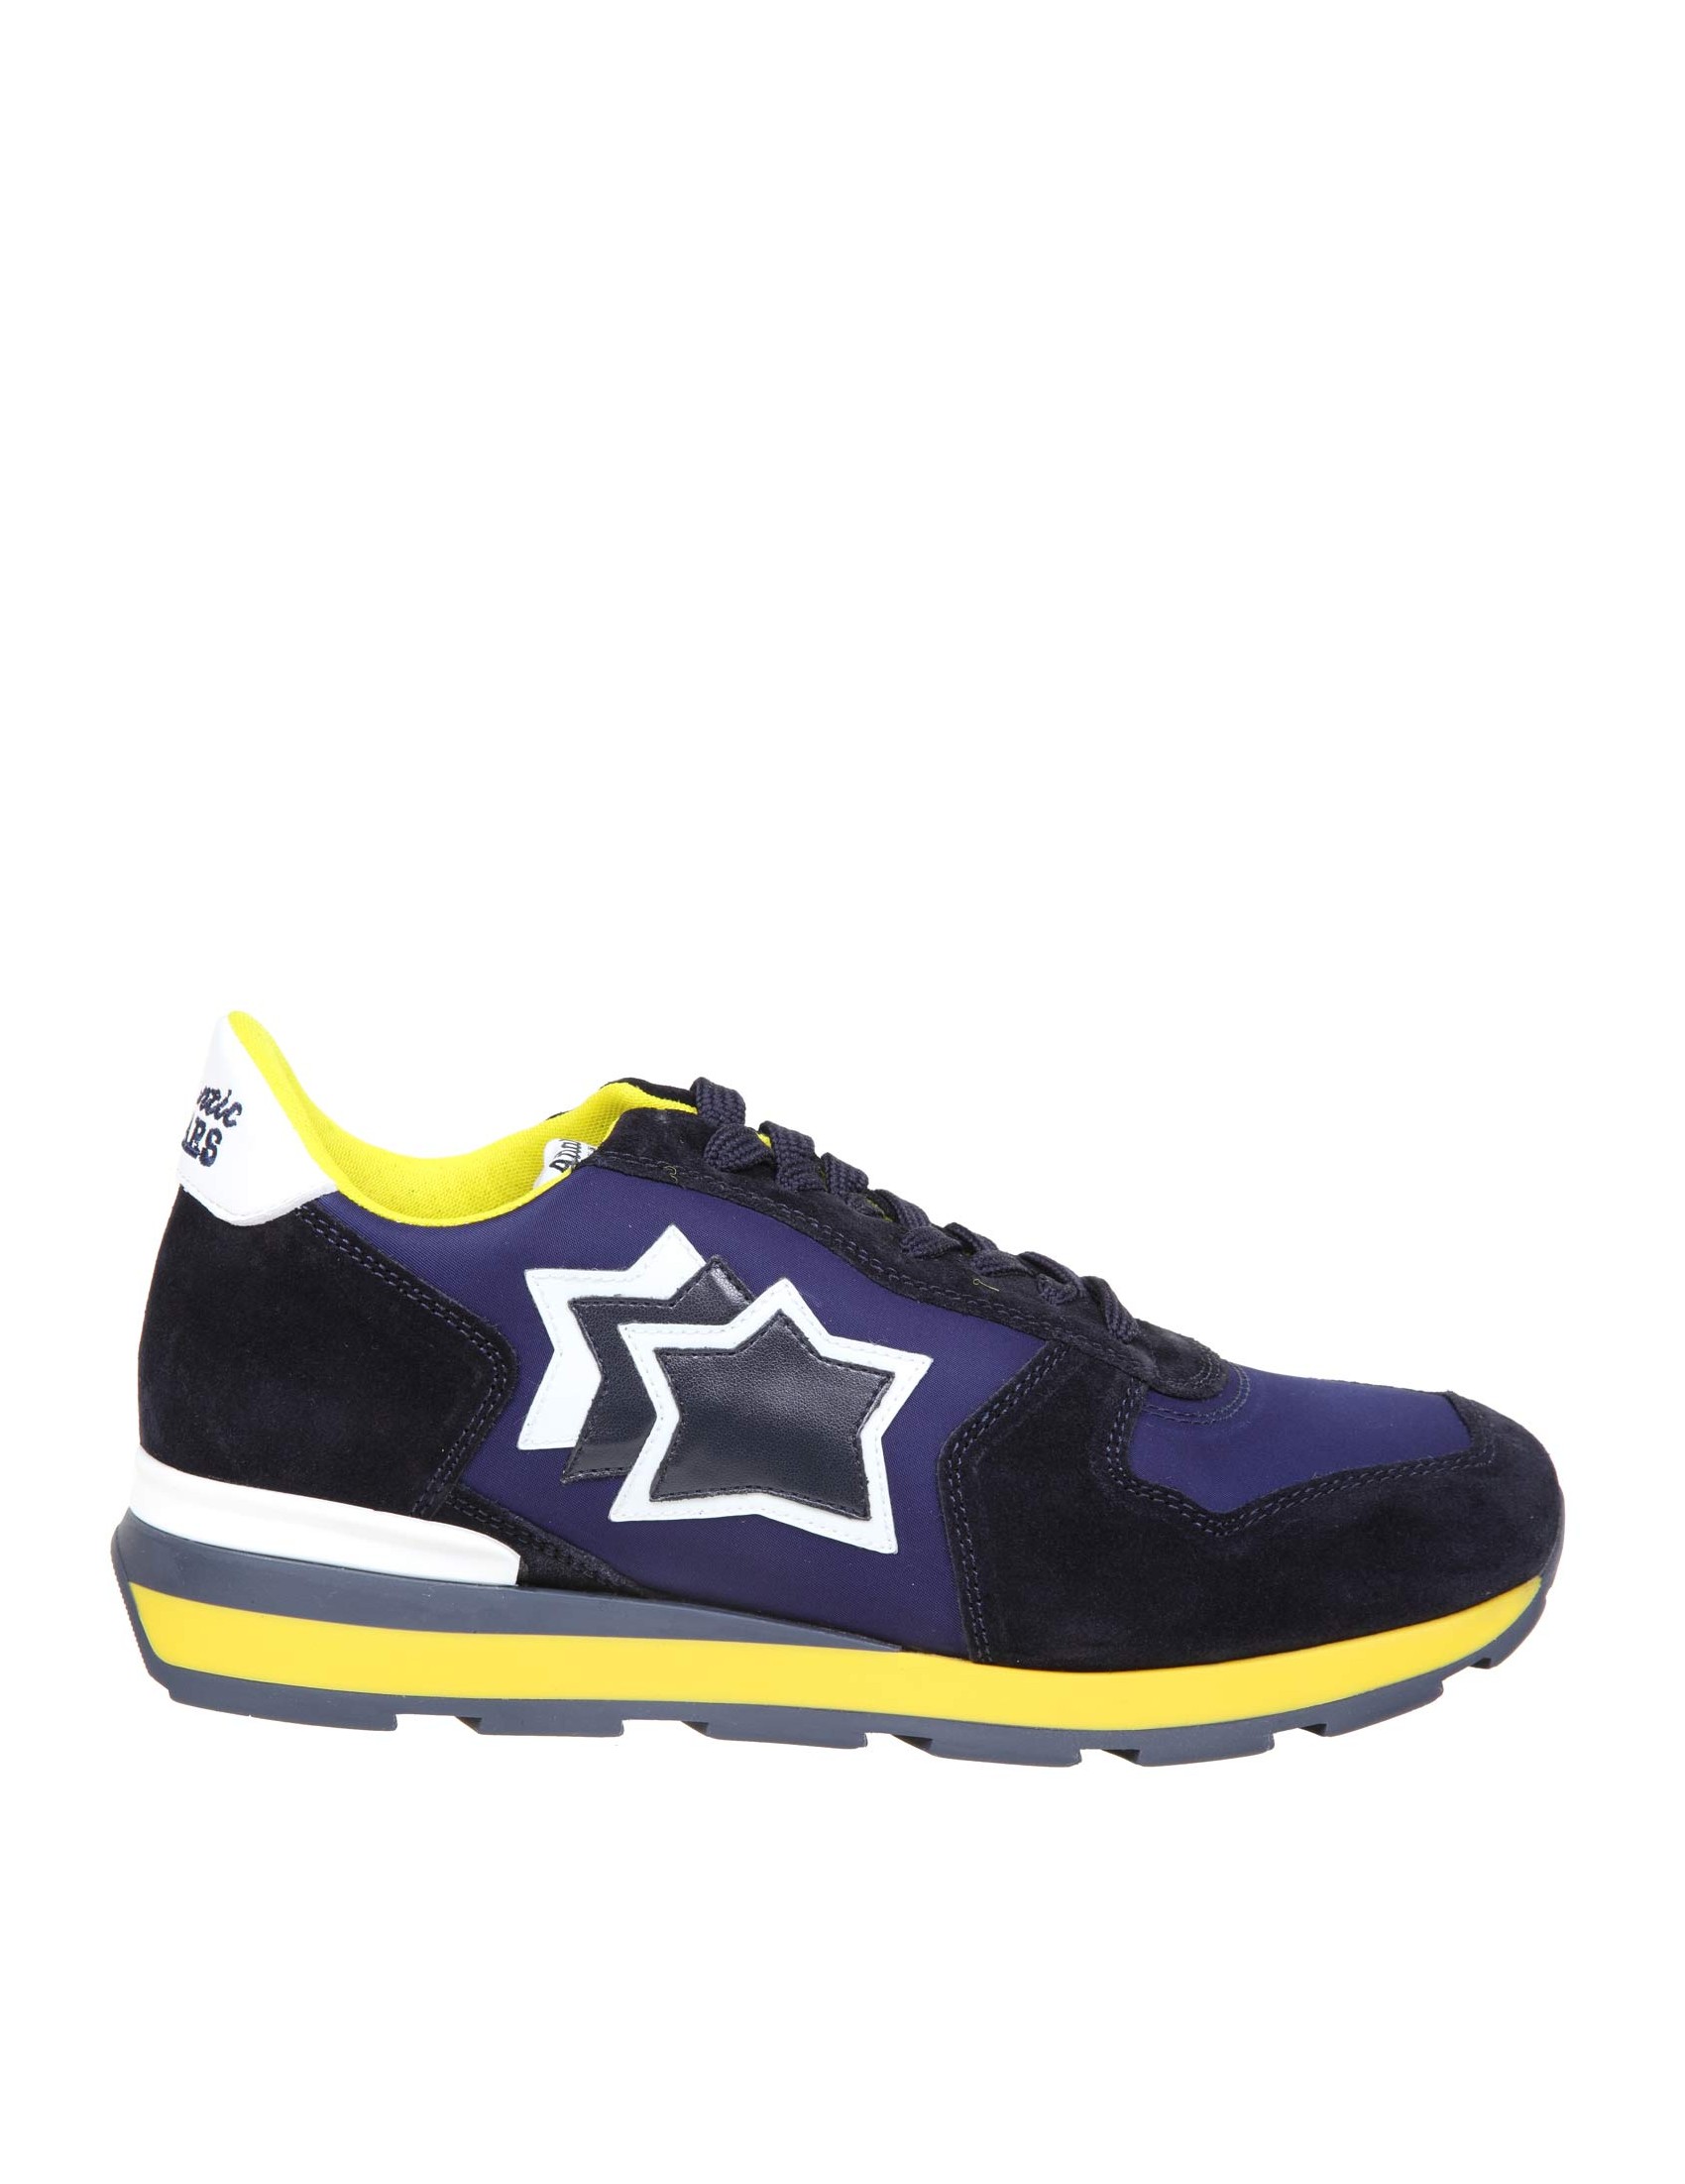 ATLANTIC STARS Men's Shoes Sneakers Bluette NIB Authentic 40 41 42 43 44 45  | eBay